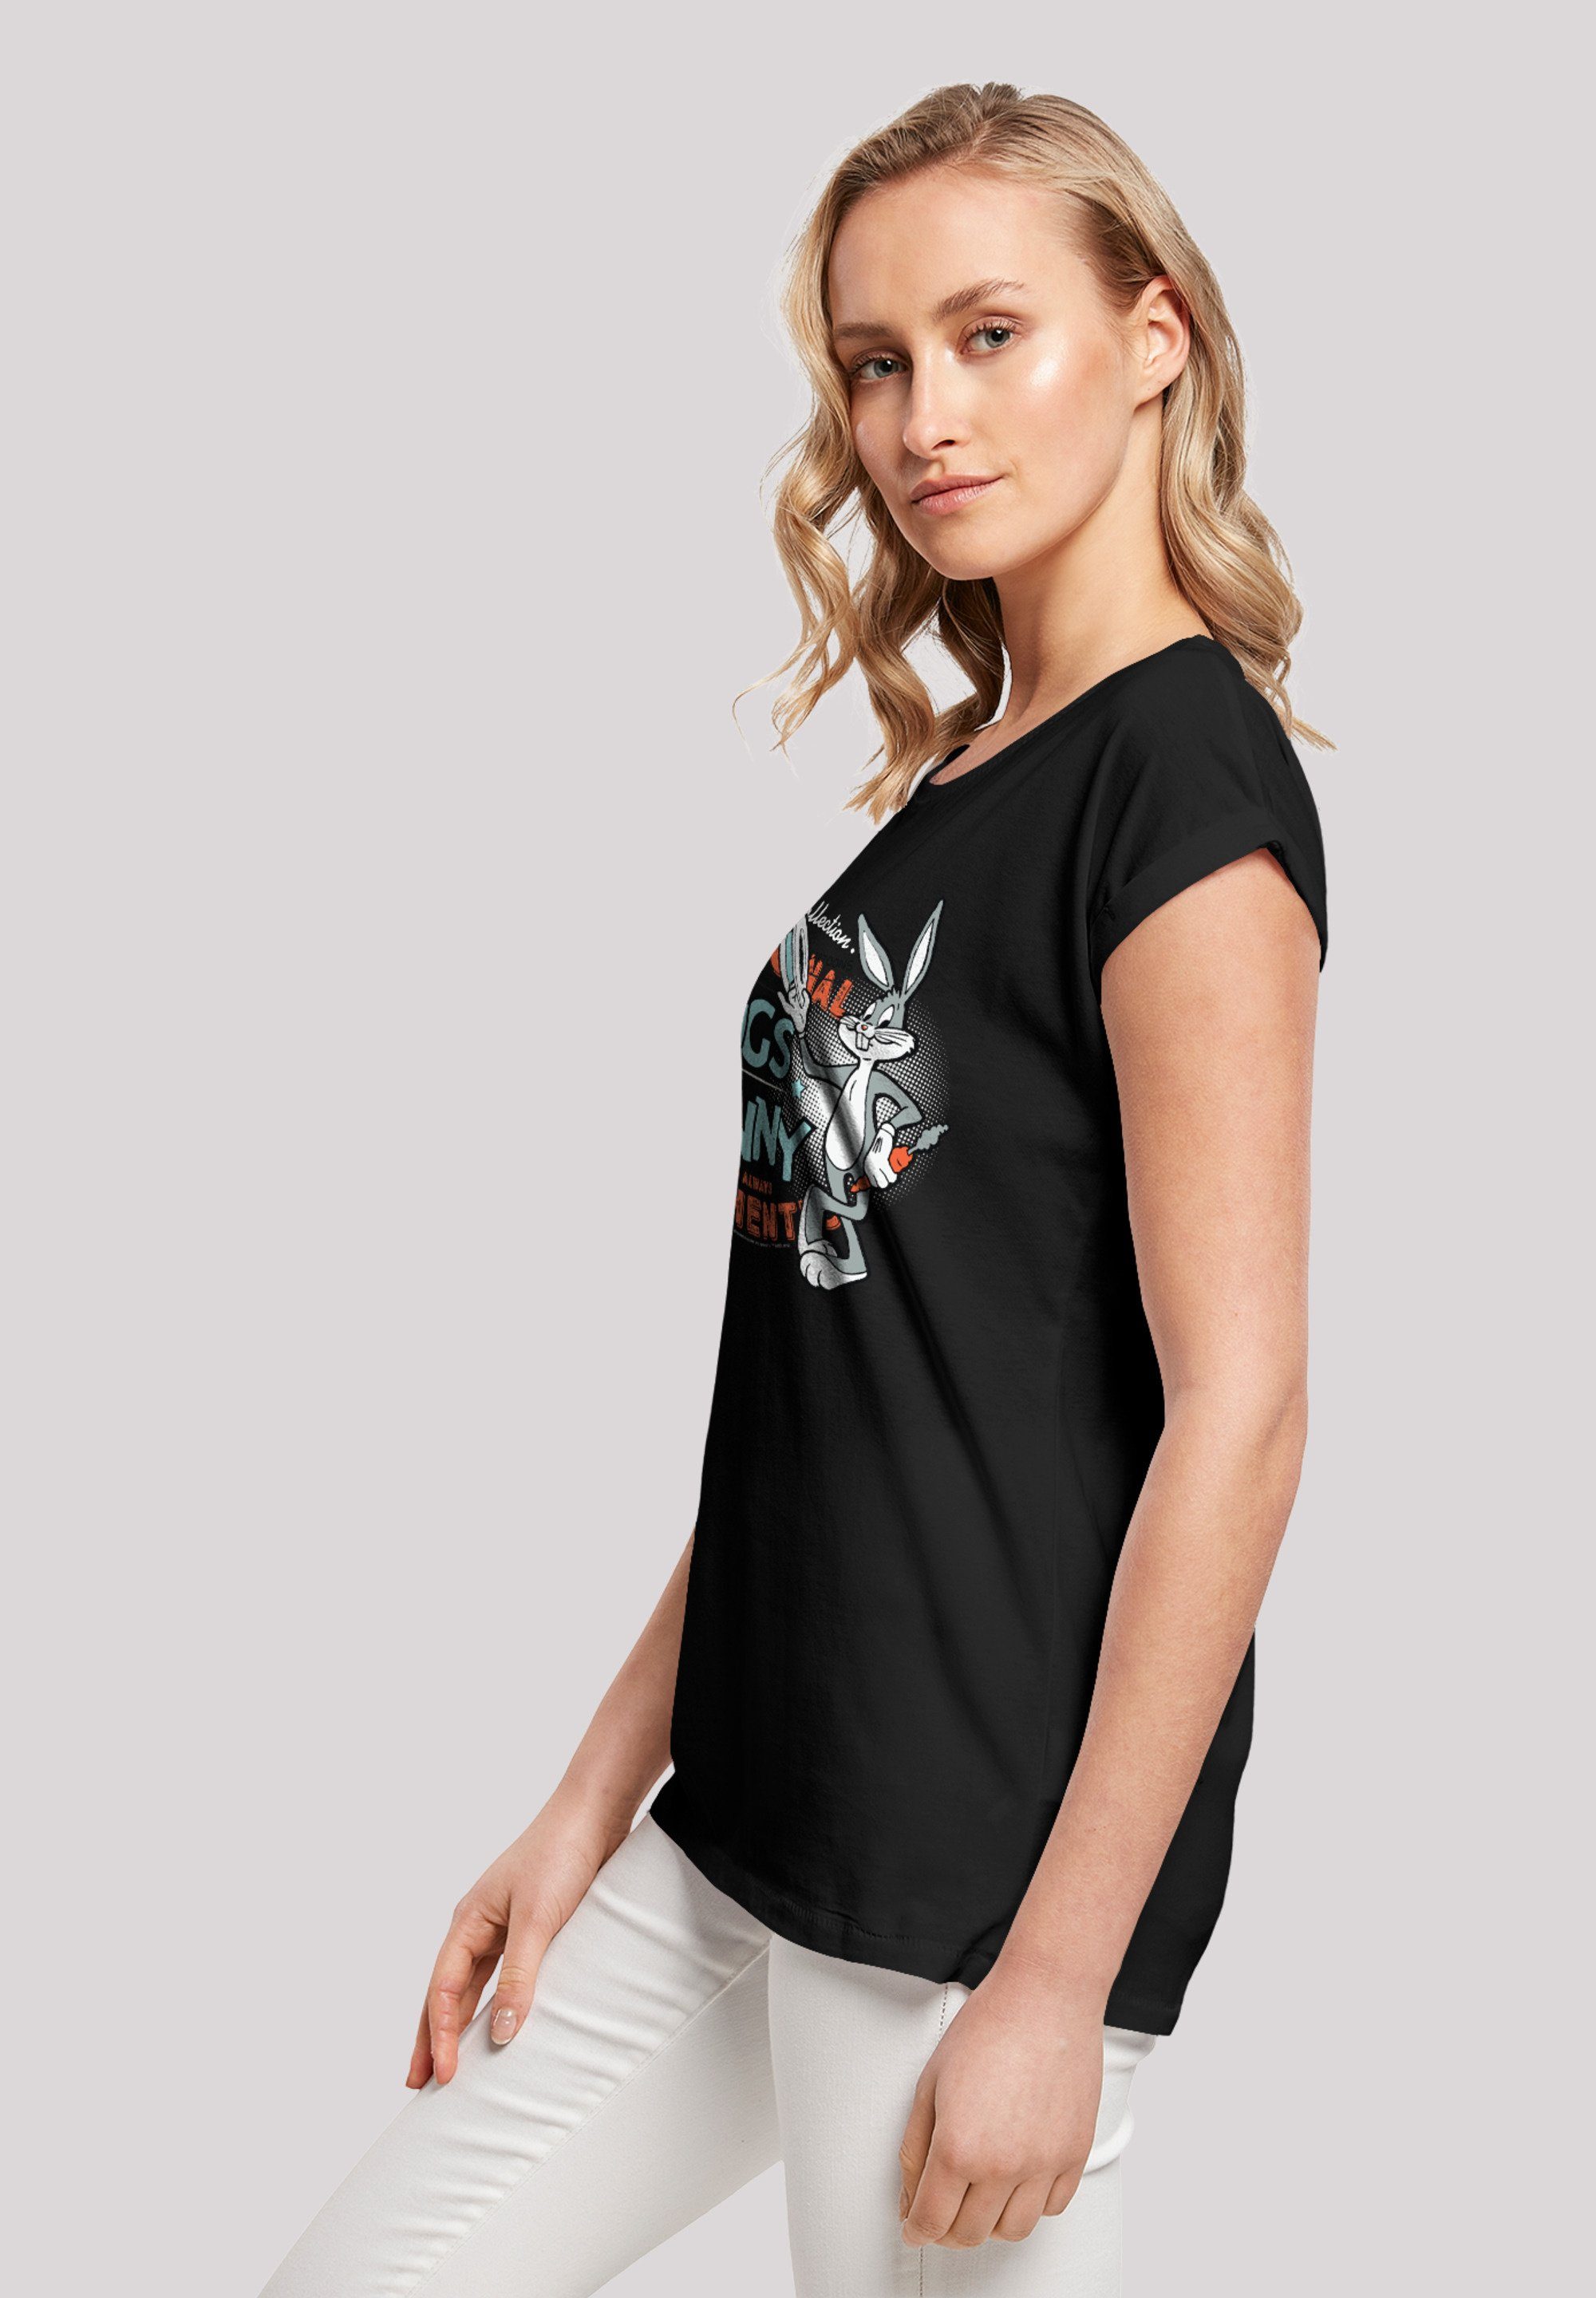 Damen Shirts F4NT4STIC T-Shirt Extended Shoulder T-Shirt Looney Tunes Vintage Bugs Bunny